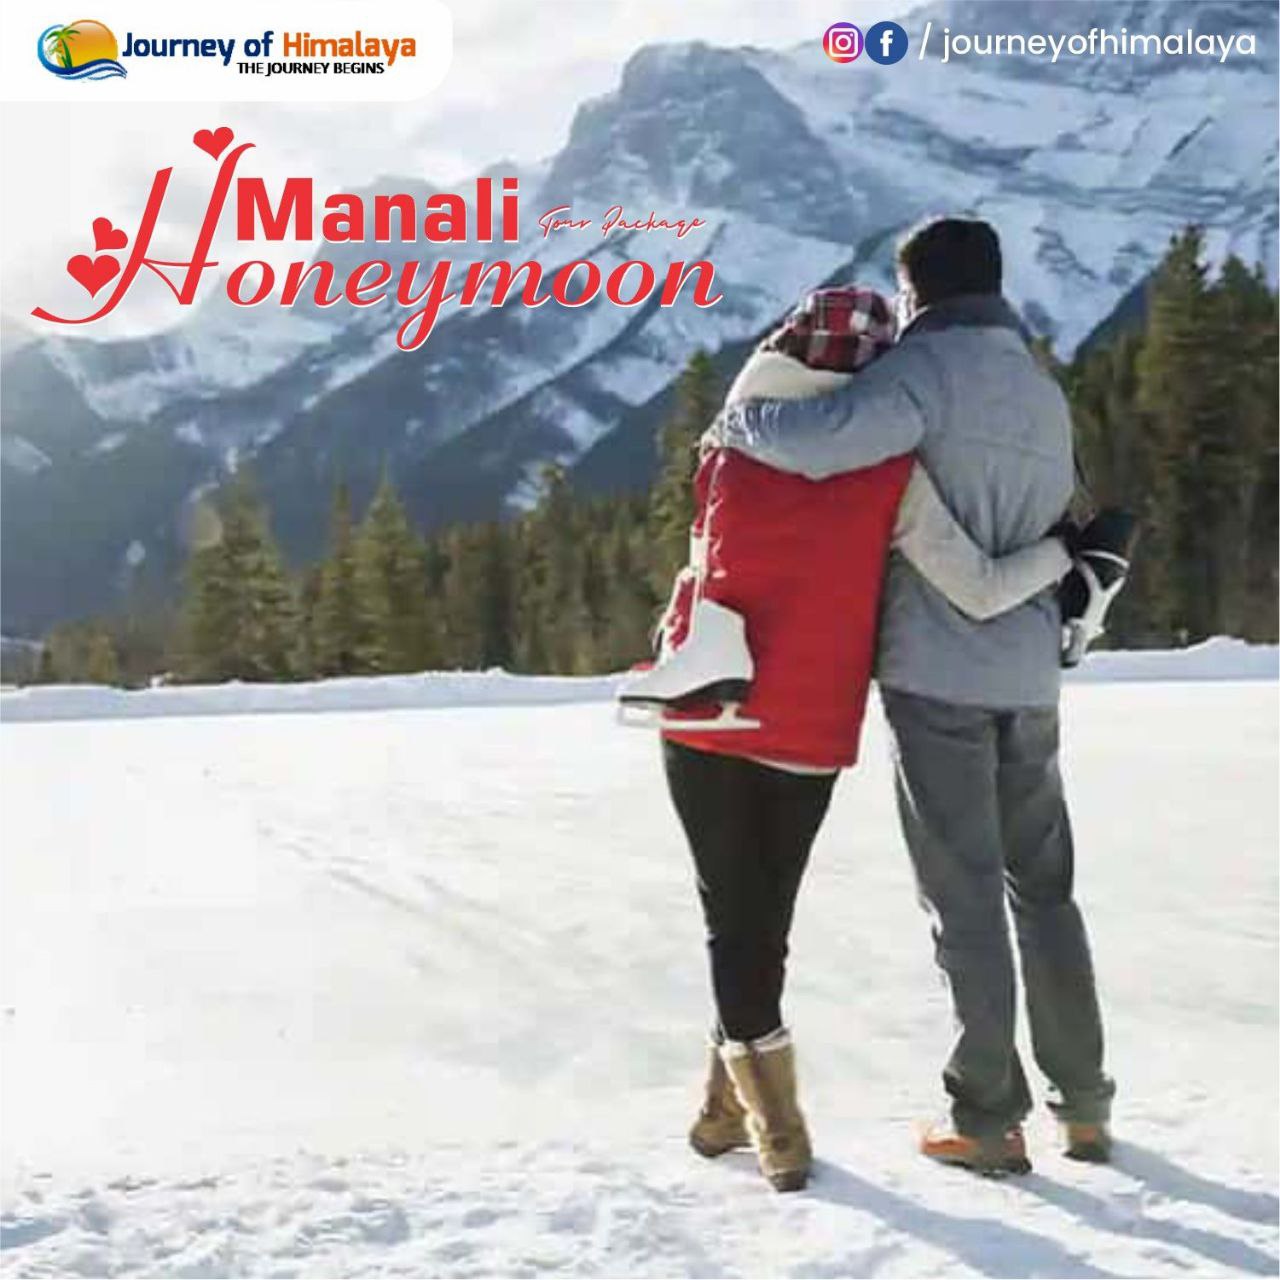 Manali Honeymoon Packages - 5N/6D, @5,999/- Person, 25% Off.